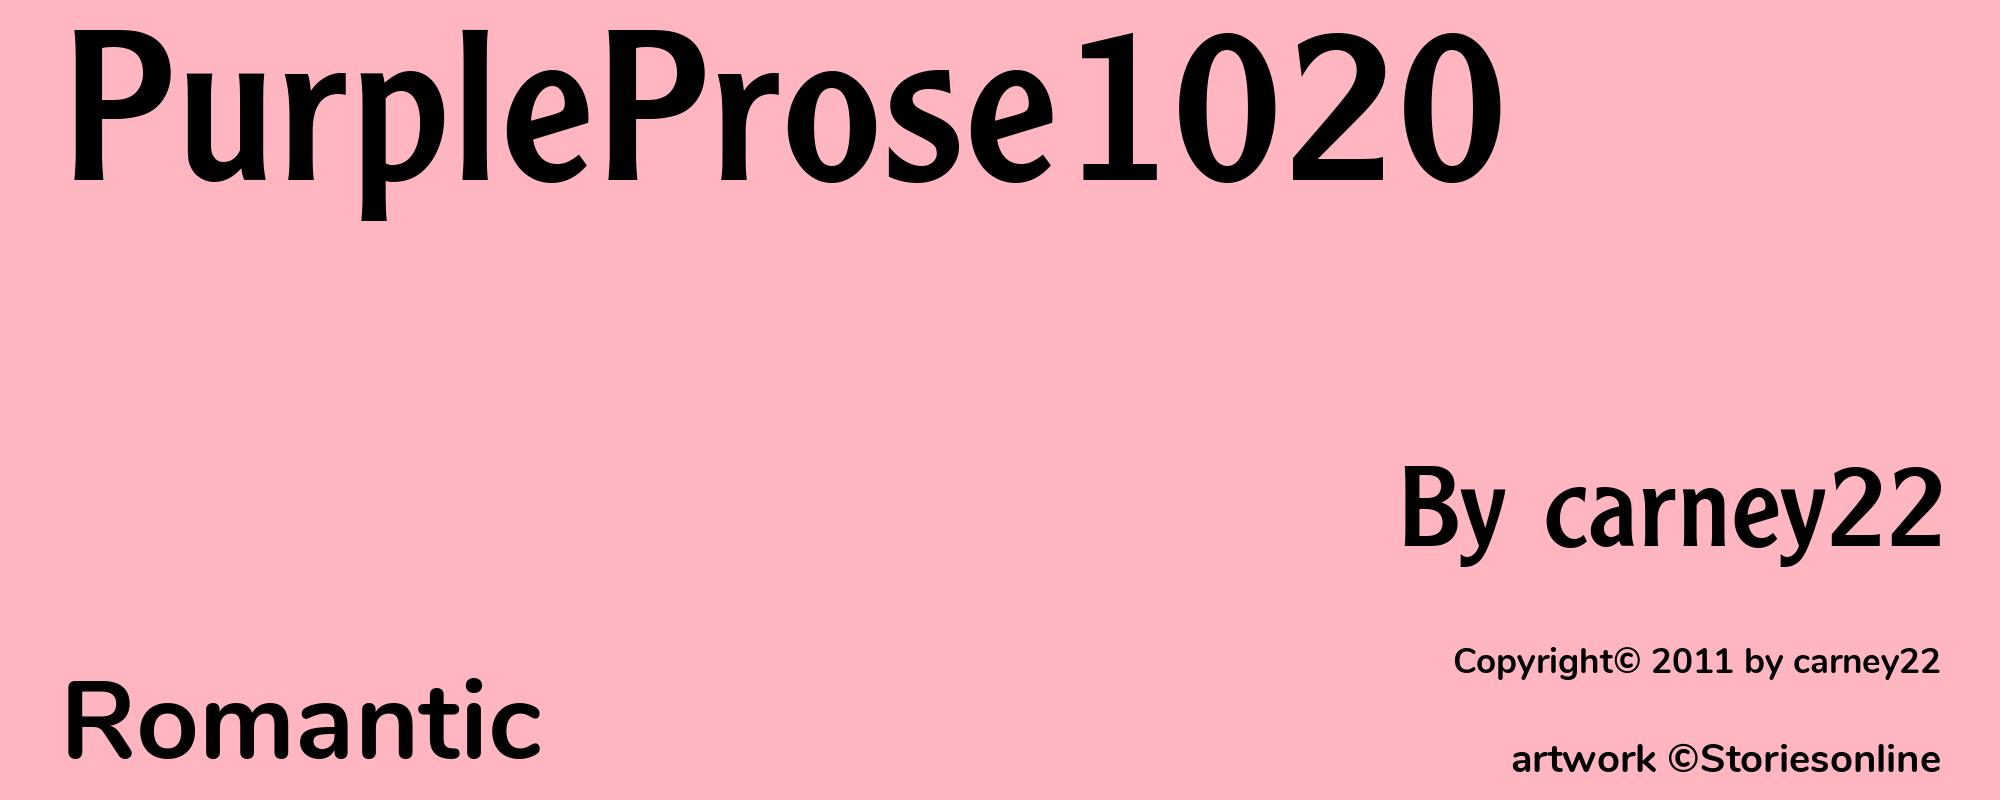 PurpleProse1020 - Cover